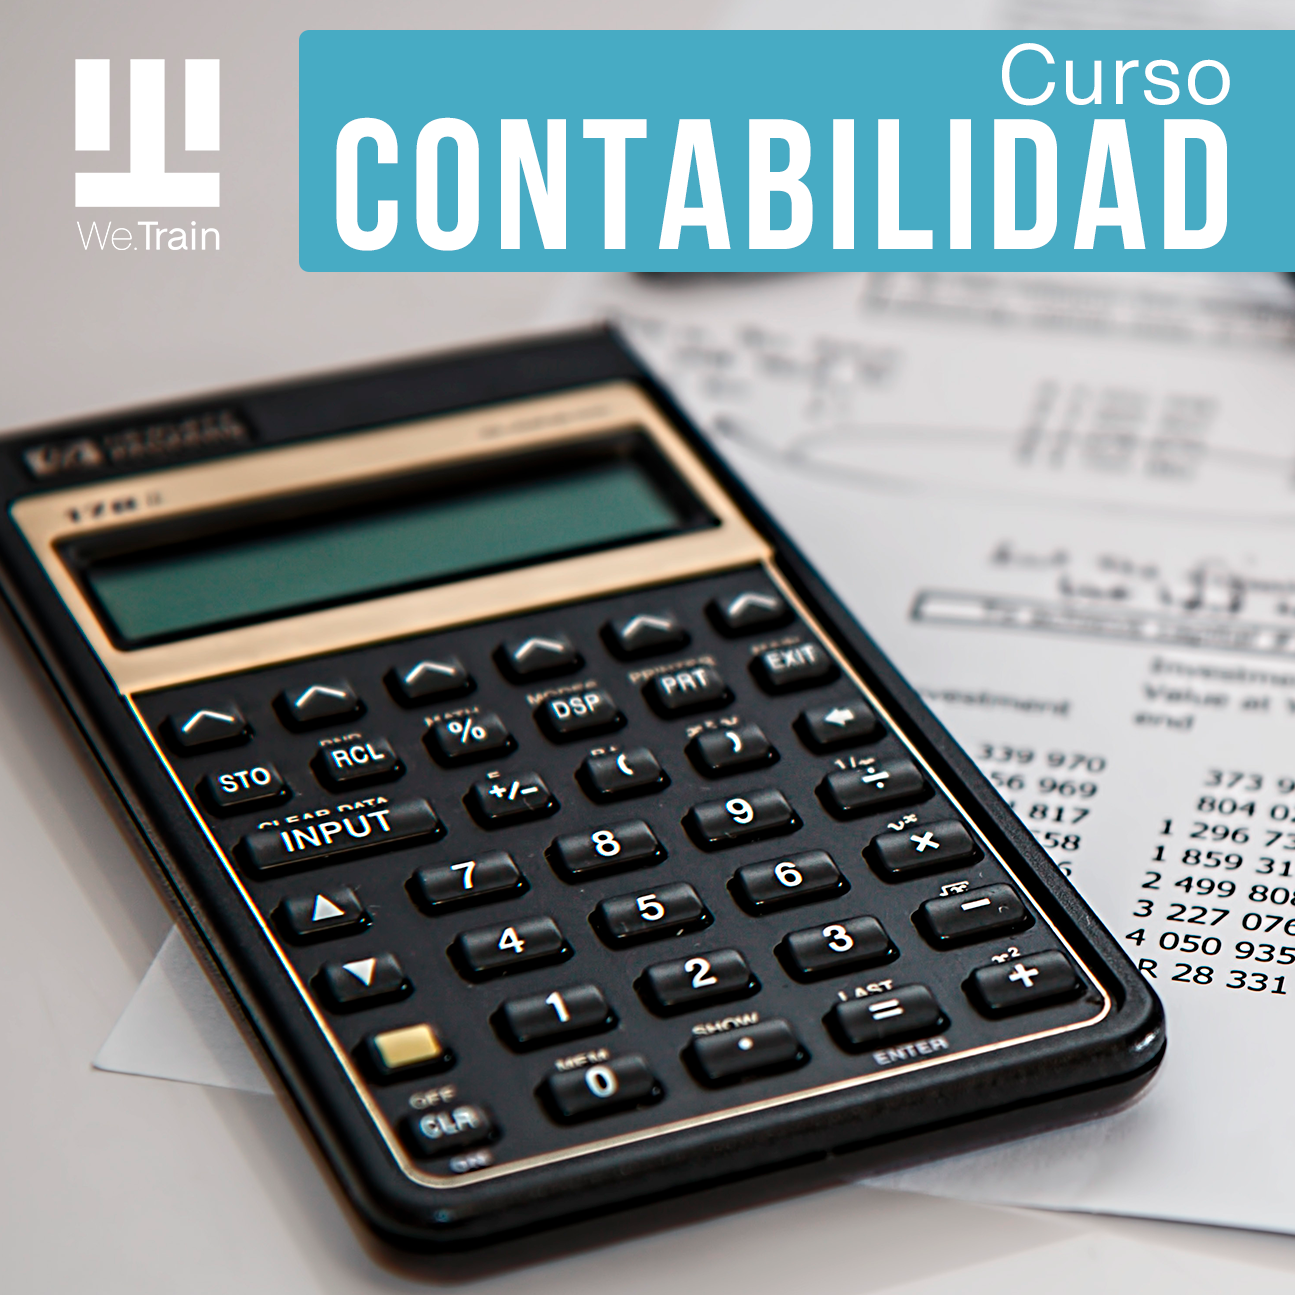 CONTPAQi® CONTABILIDAD CURSO COMPLETO